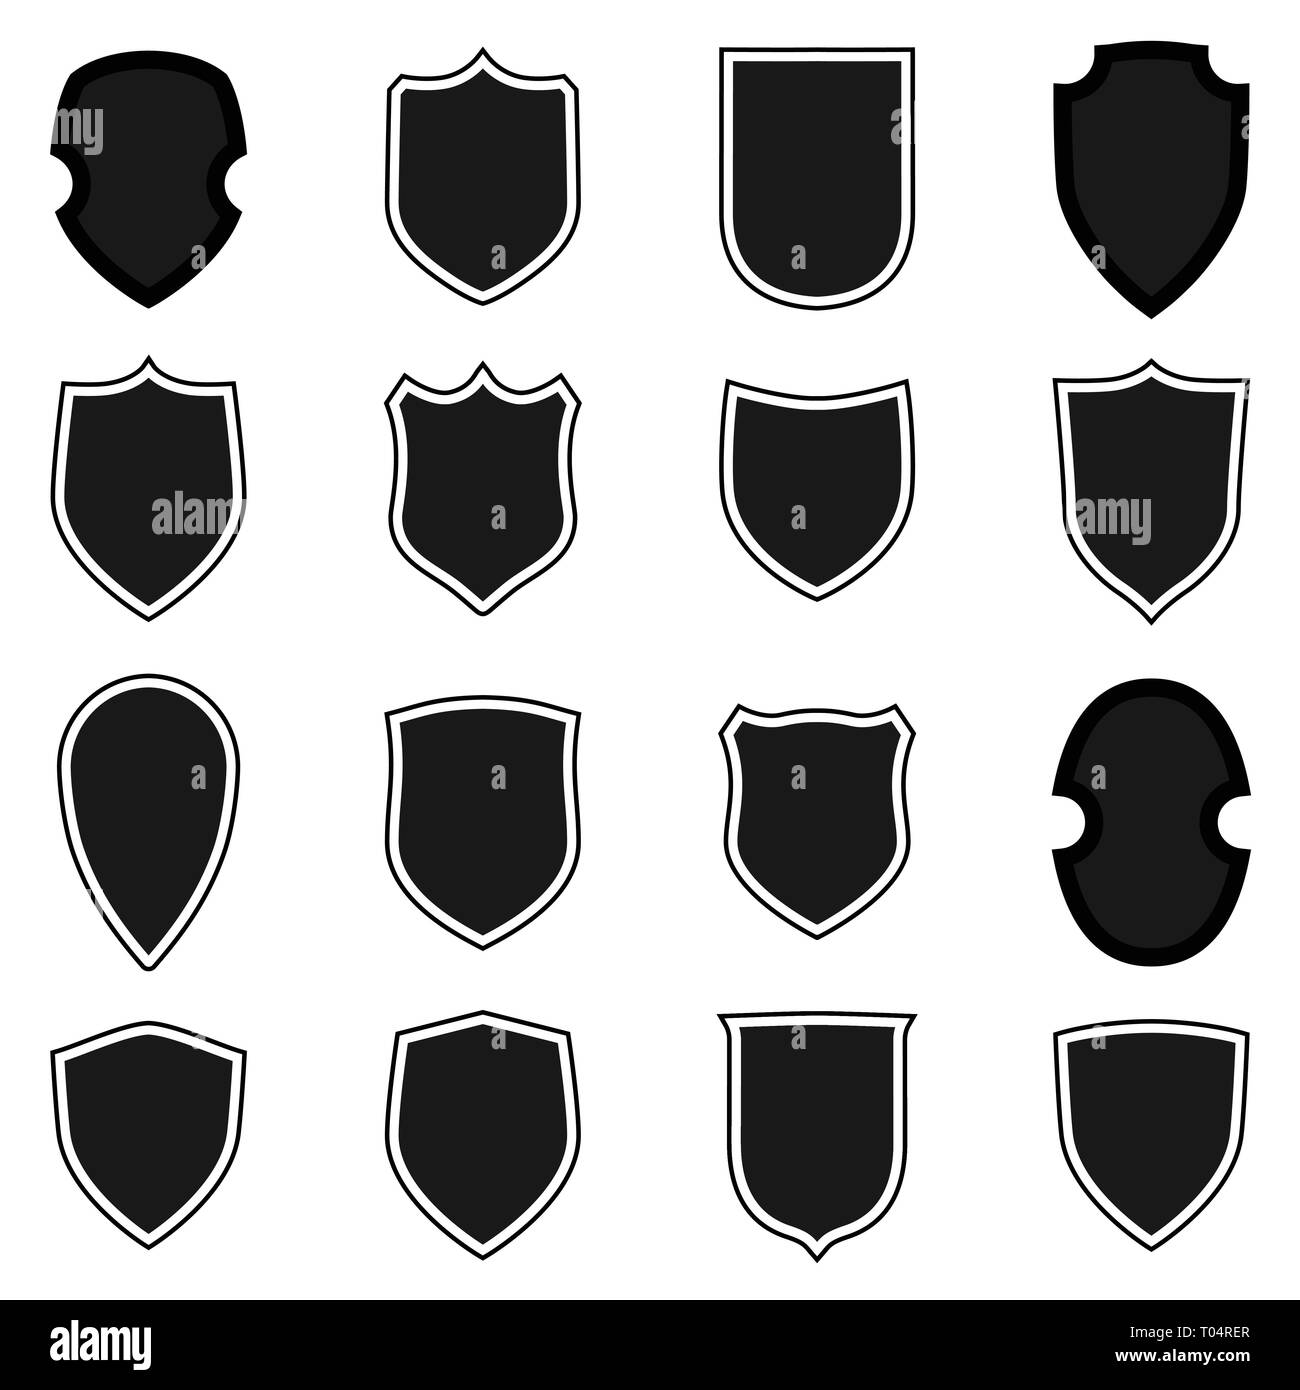 Shield and stylish ribbon isolated on white background. Black shield shape.  Heraldic royal design. Vector illustration.